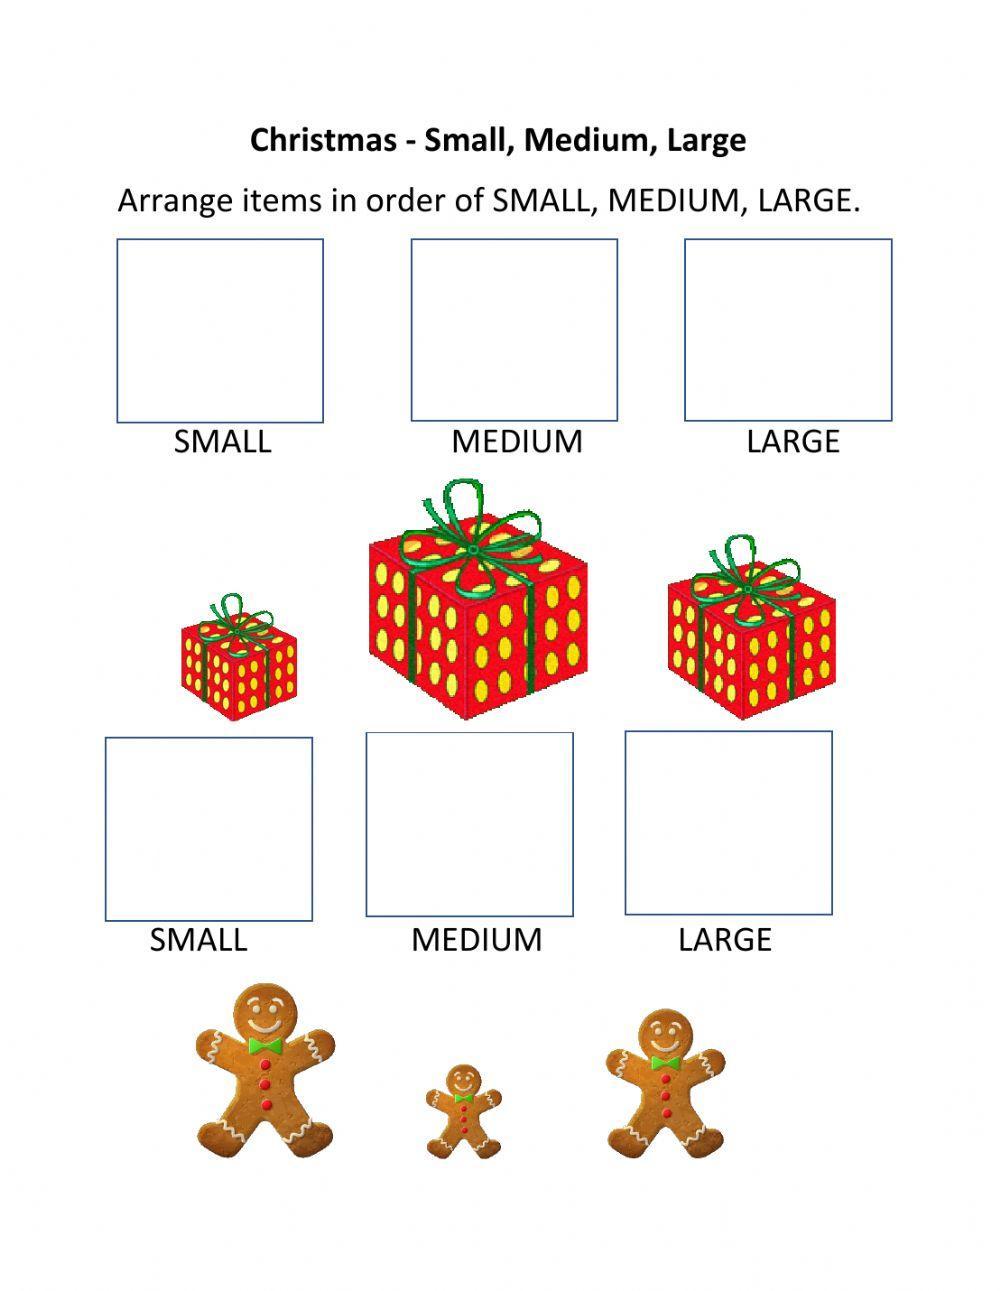 Christmas - Small, Medium, Large